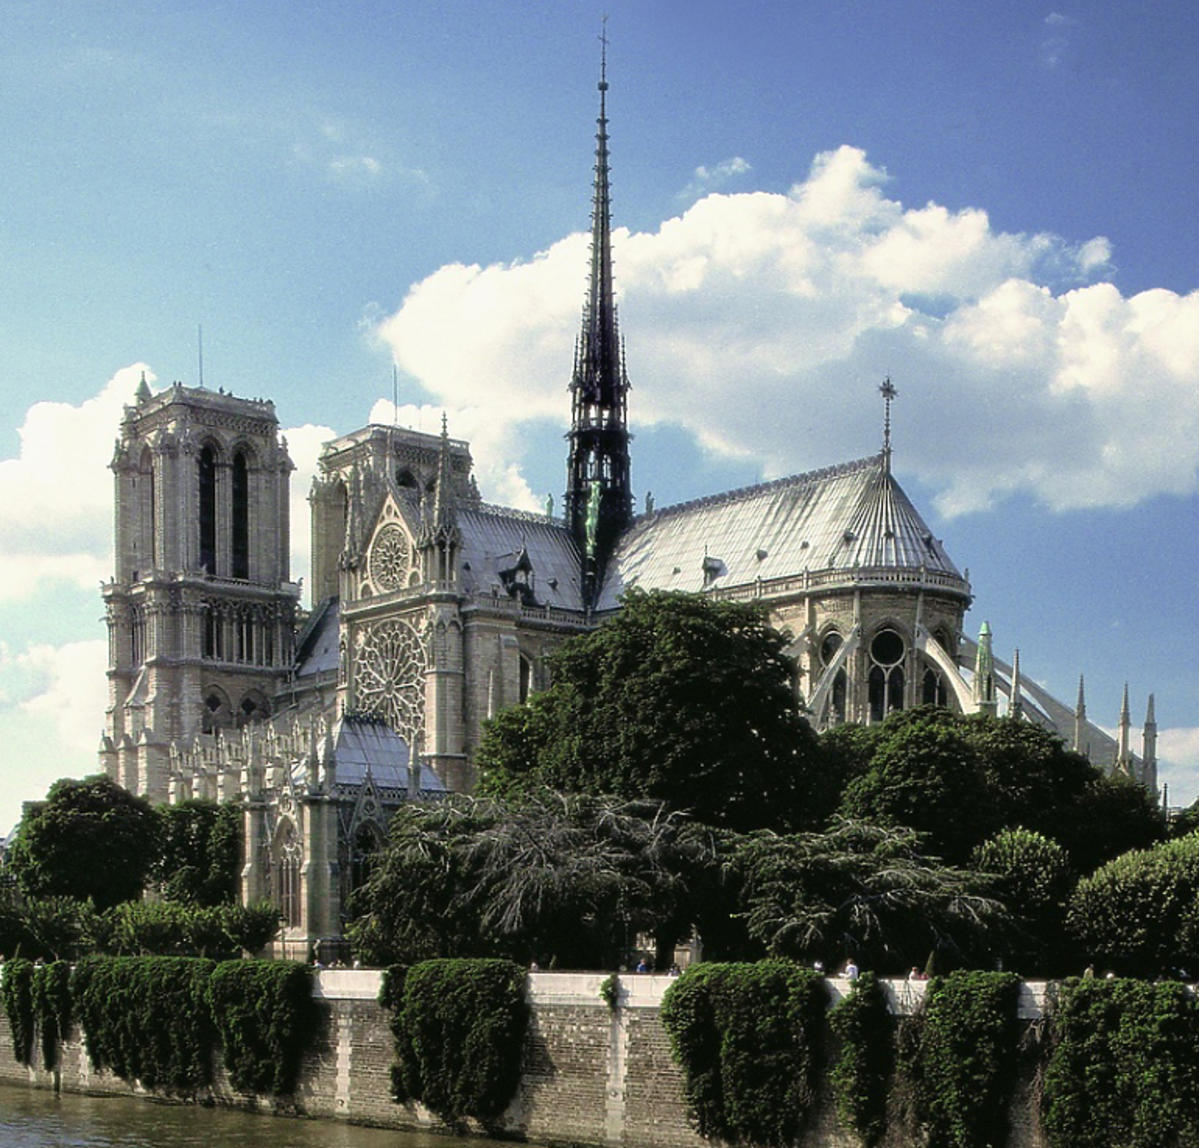 katedra Notre Dame została podpalona?